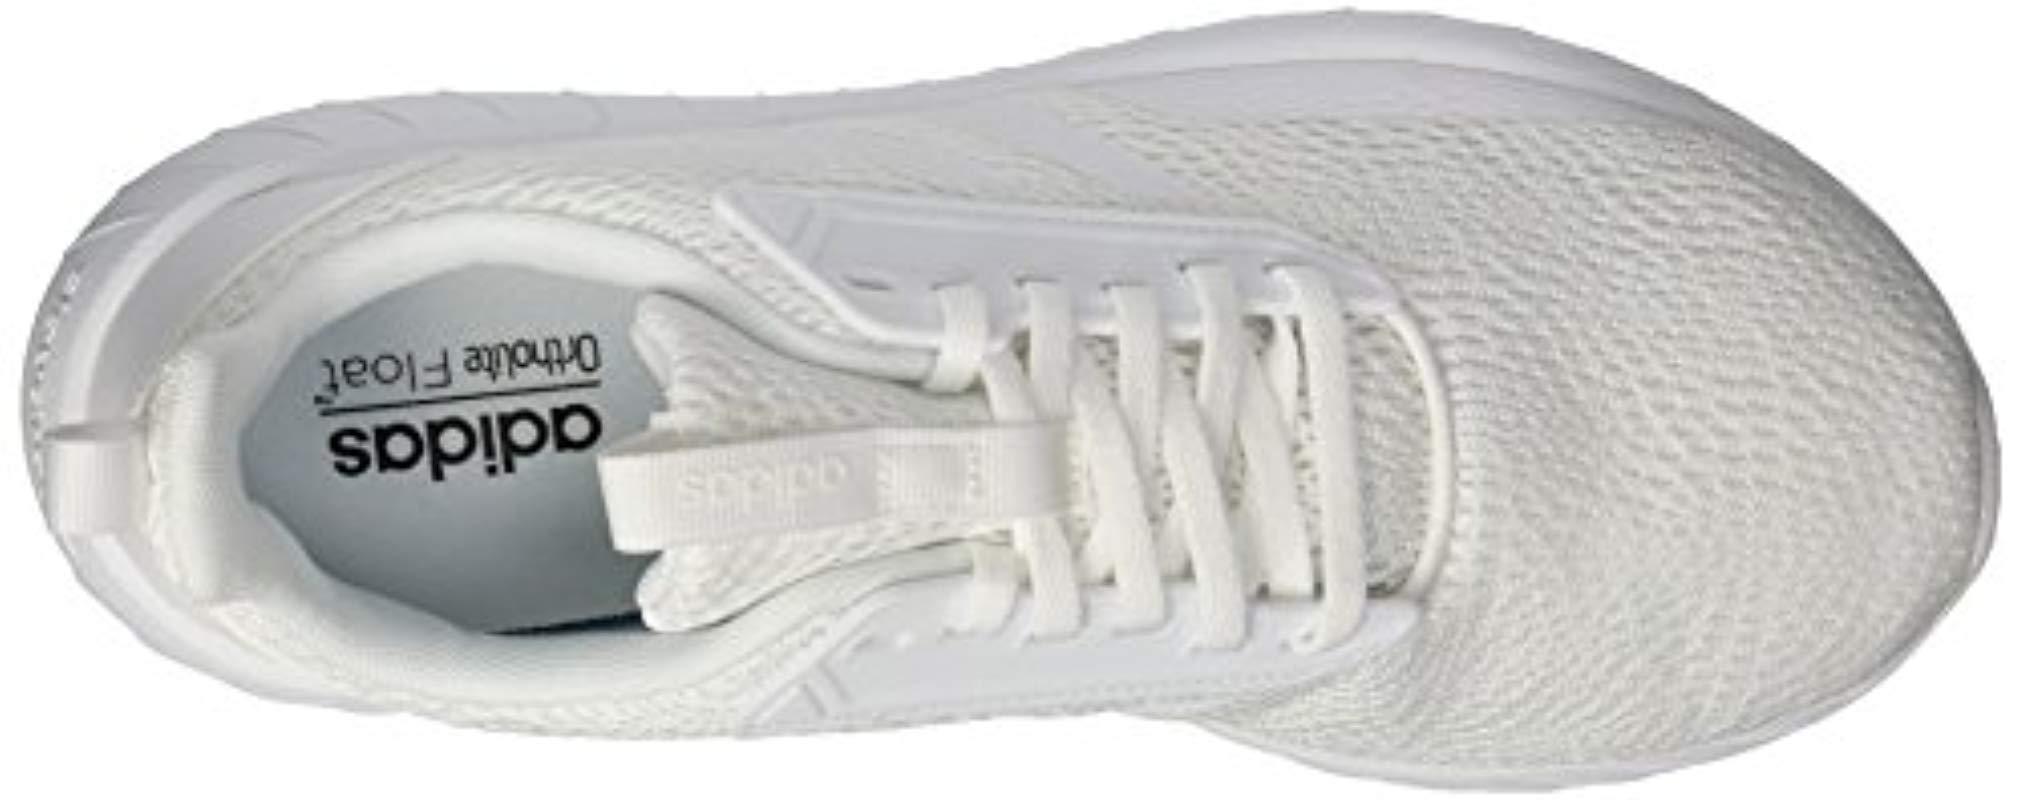 adidas Questar Drive W in White/White 